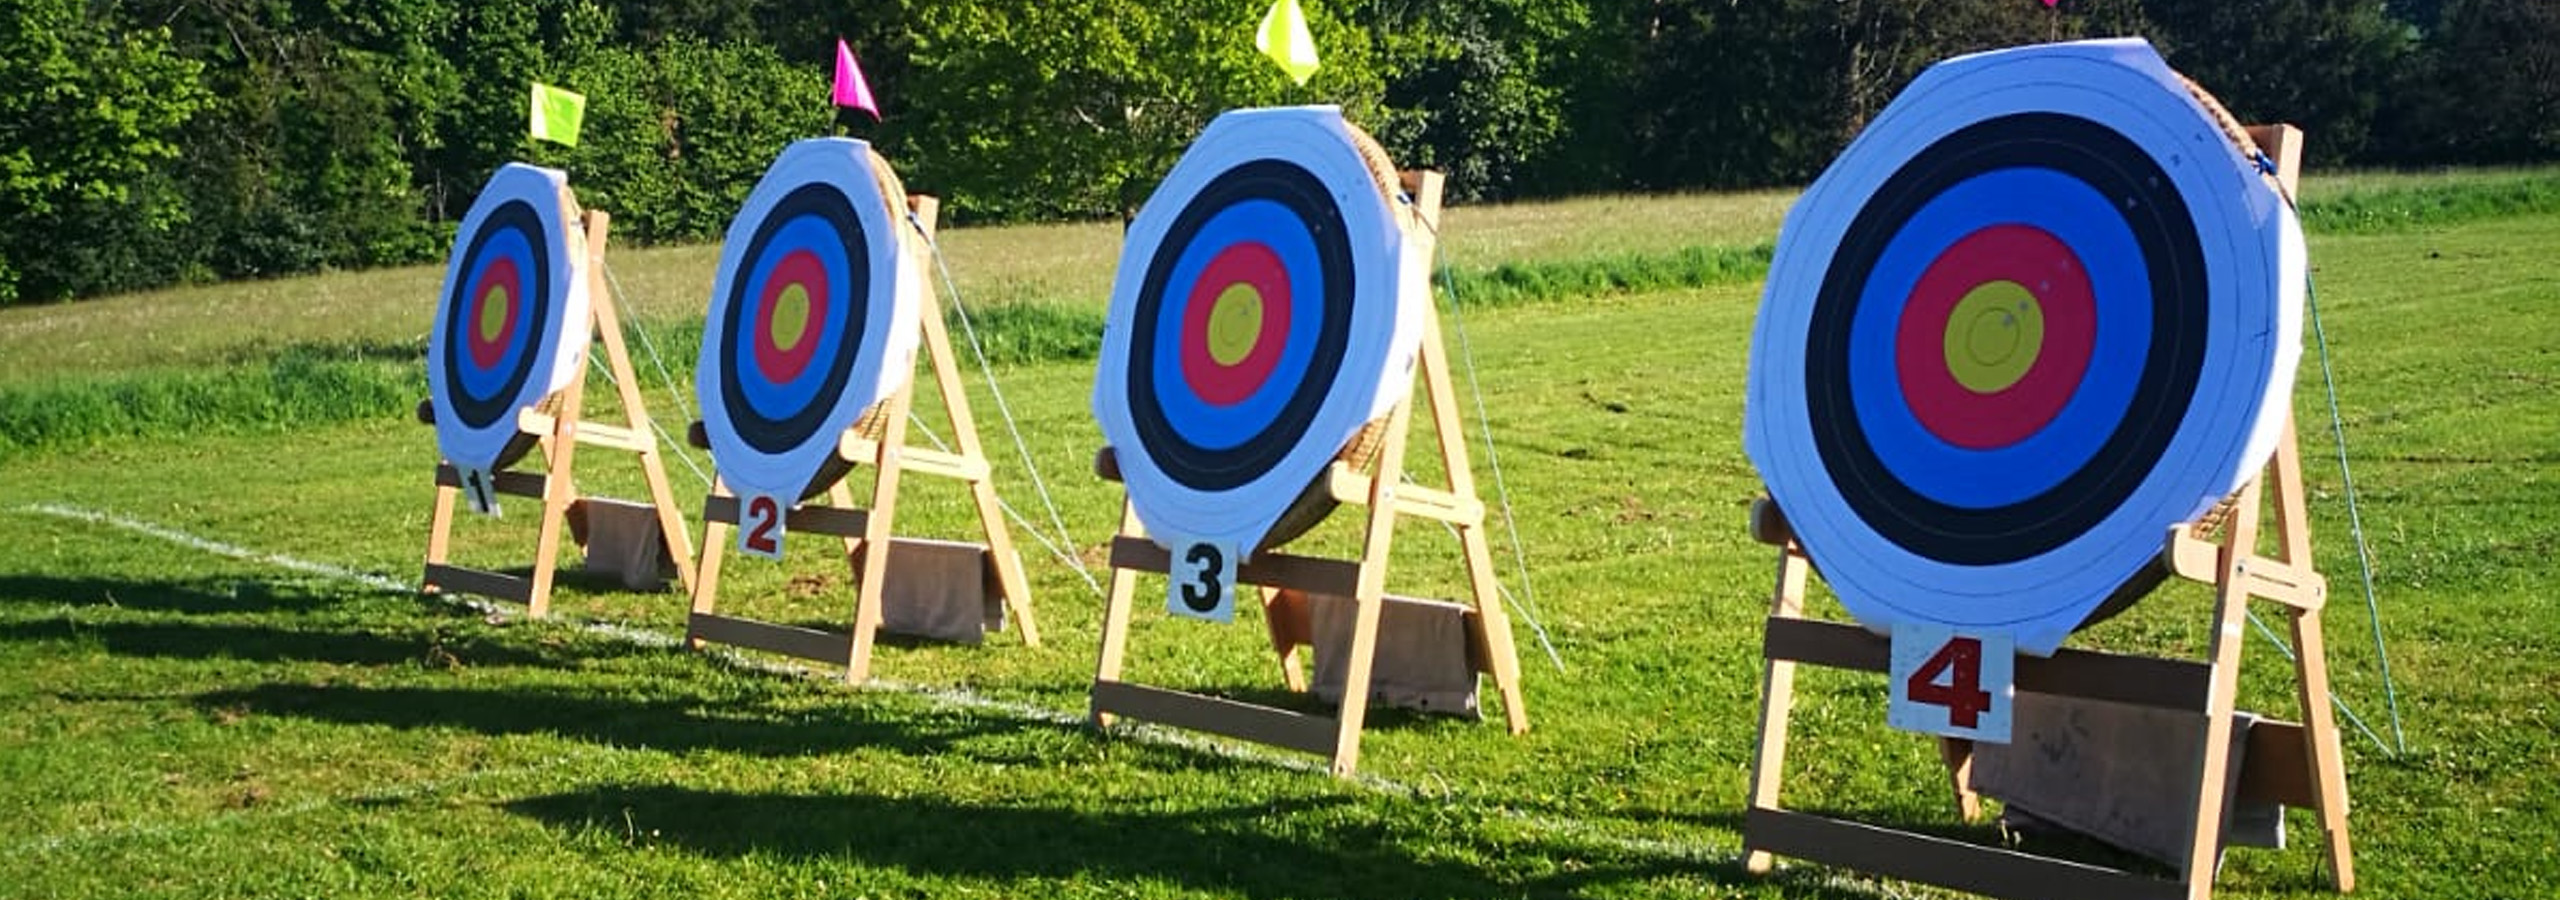 Archery Club Upper Arley - Wyre Forest Company of Archers